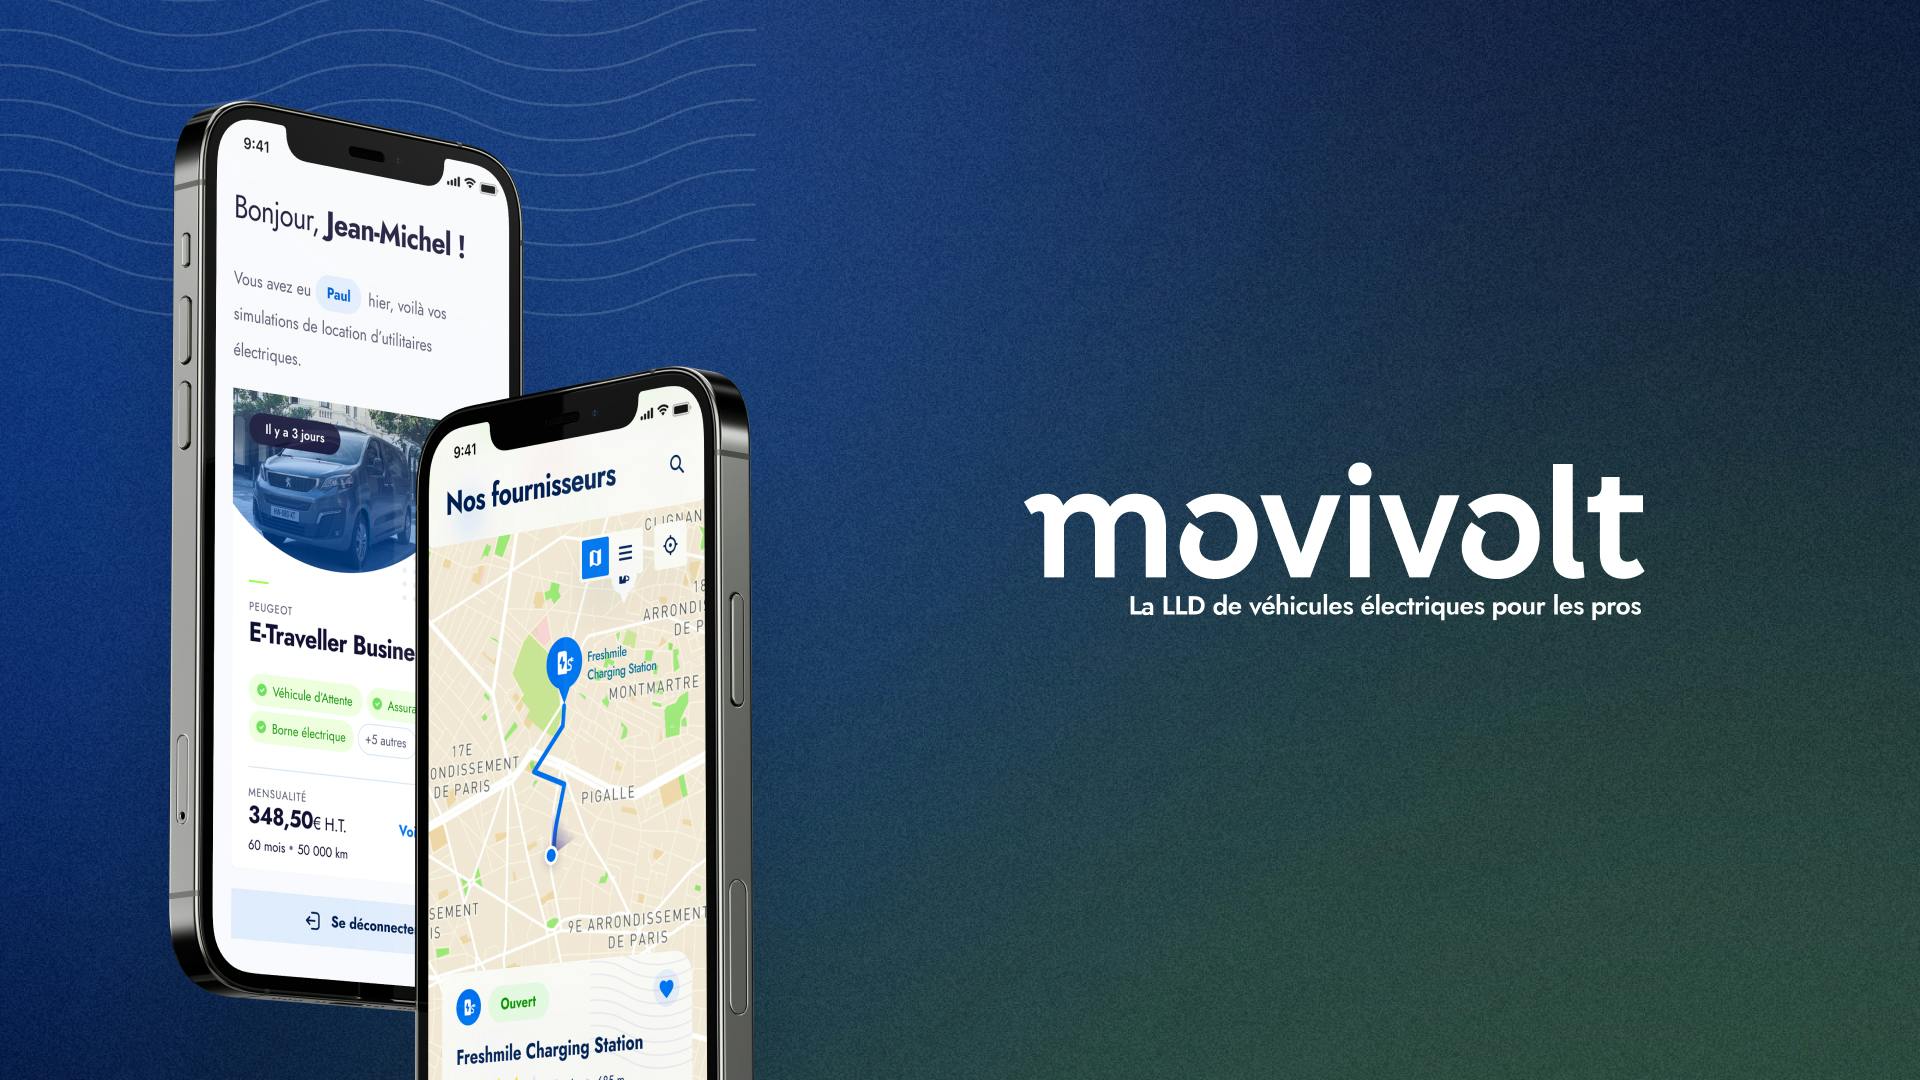 Movivolt - green mobility